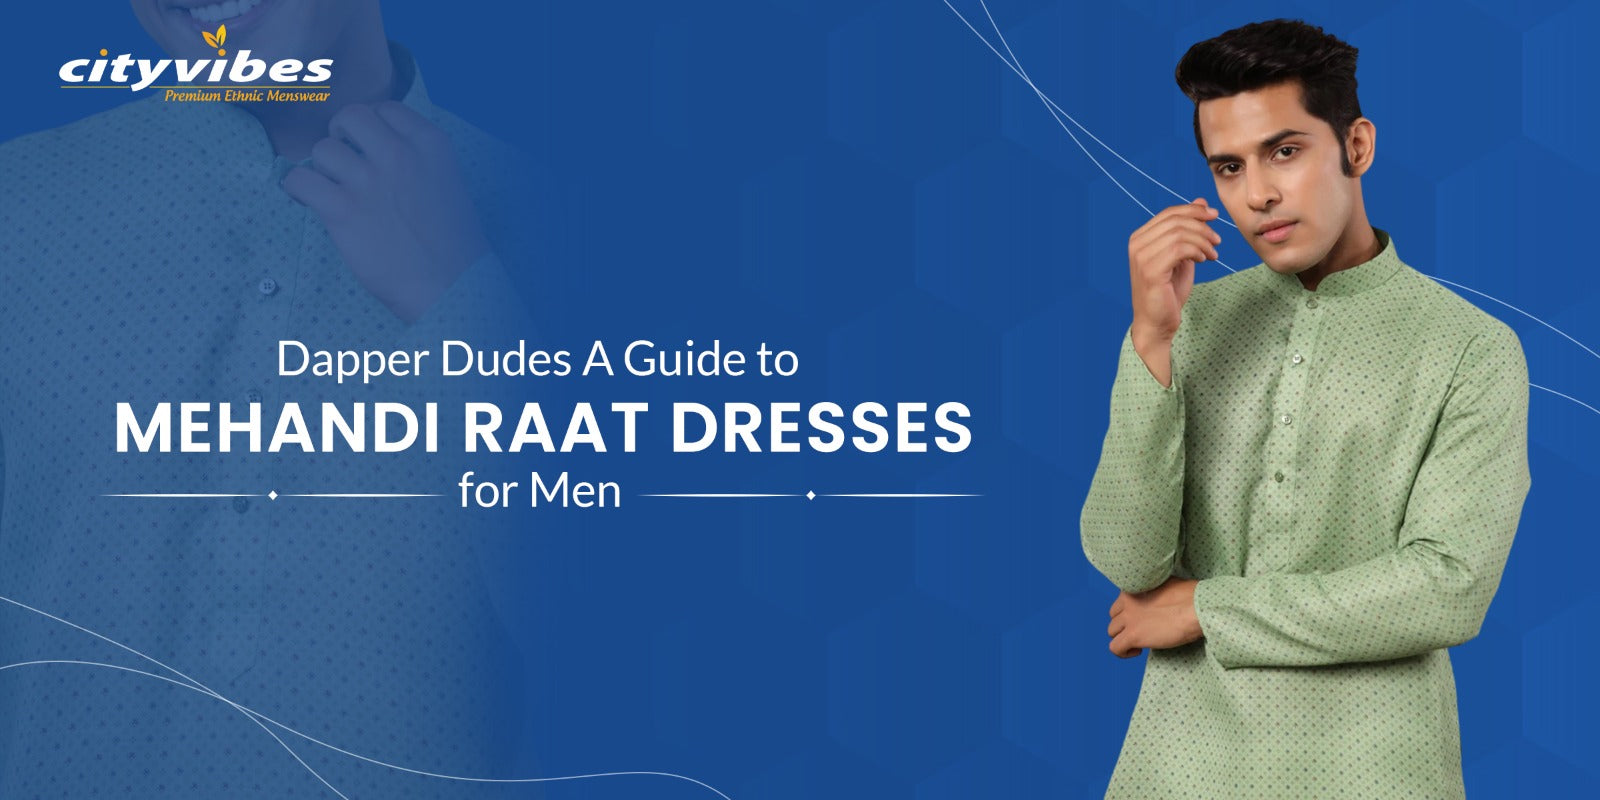 Dapper Dudes: A Guide to Mehandi Raat Dresses for Men